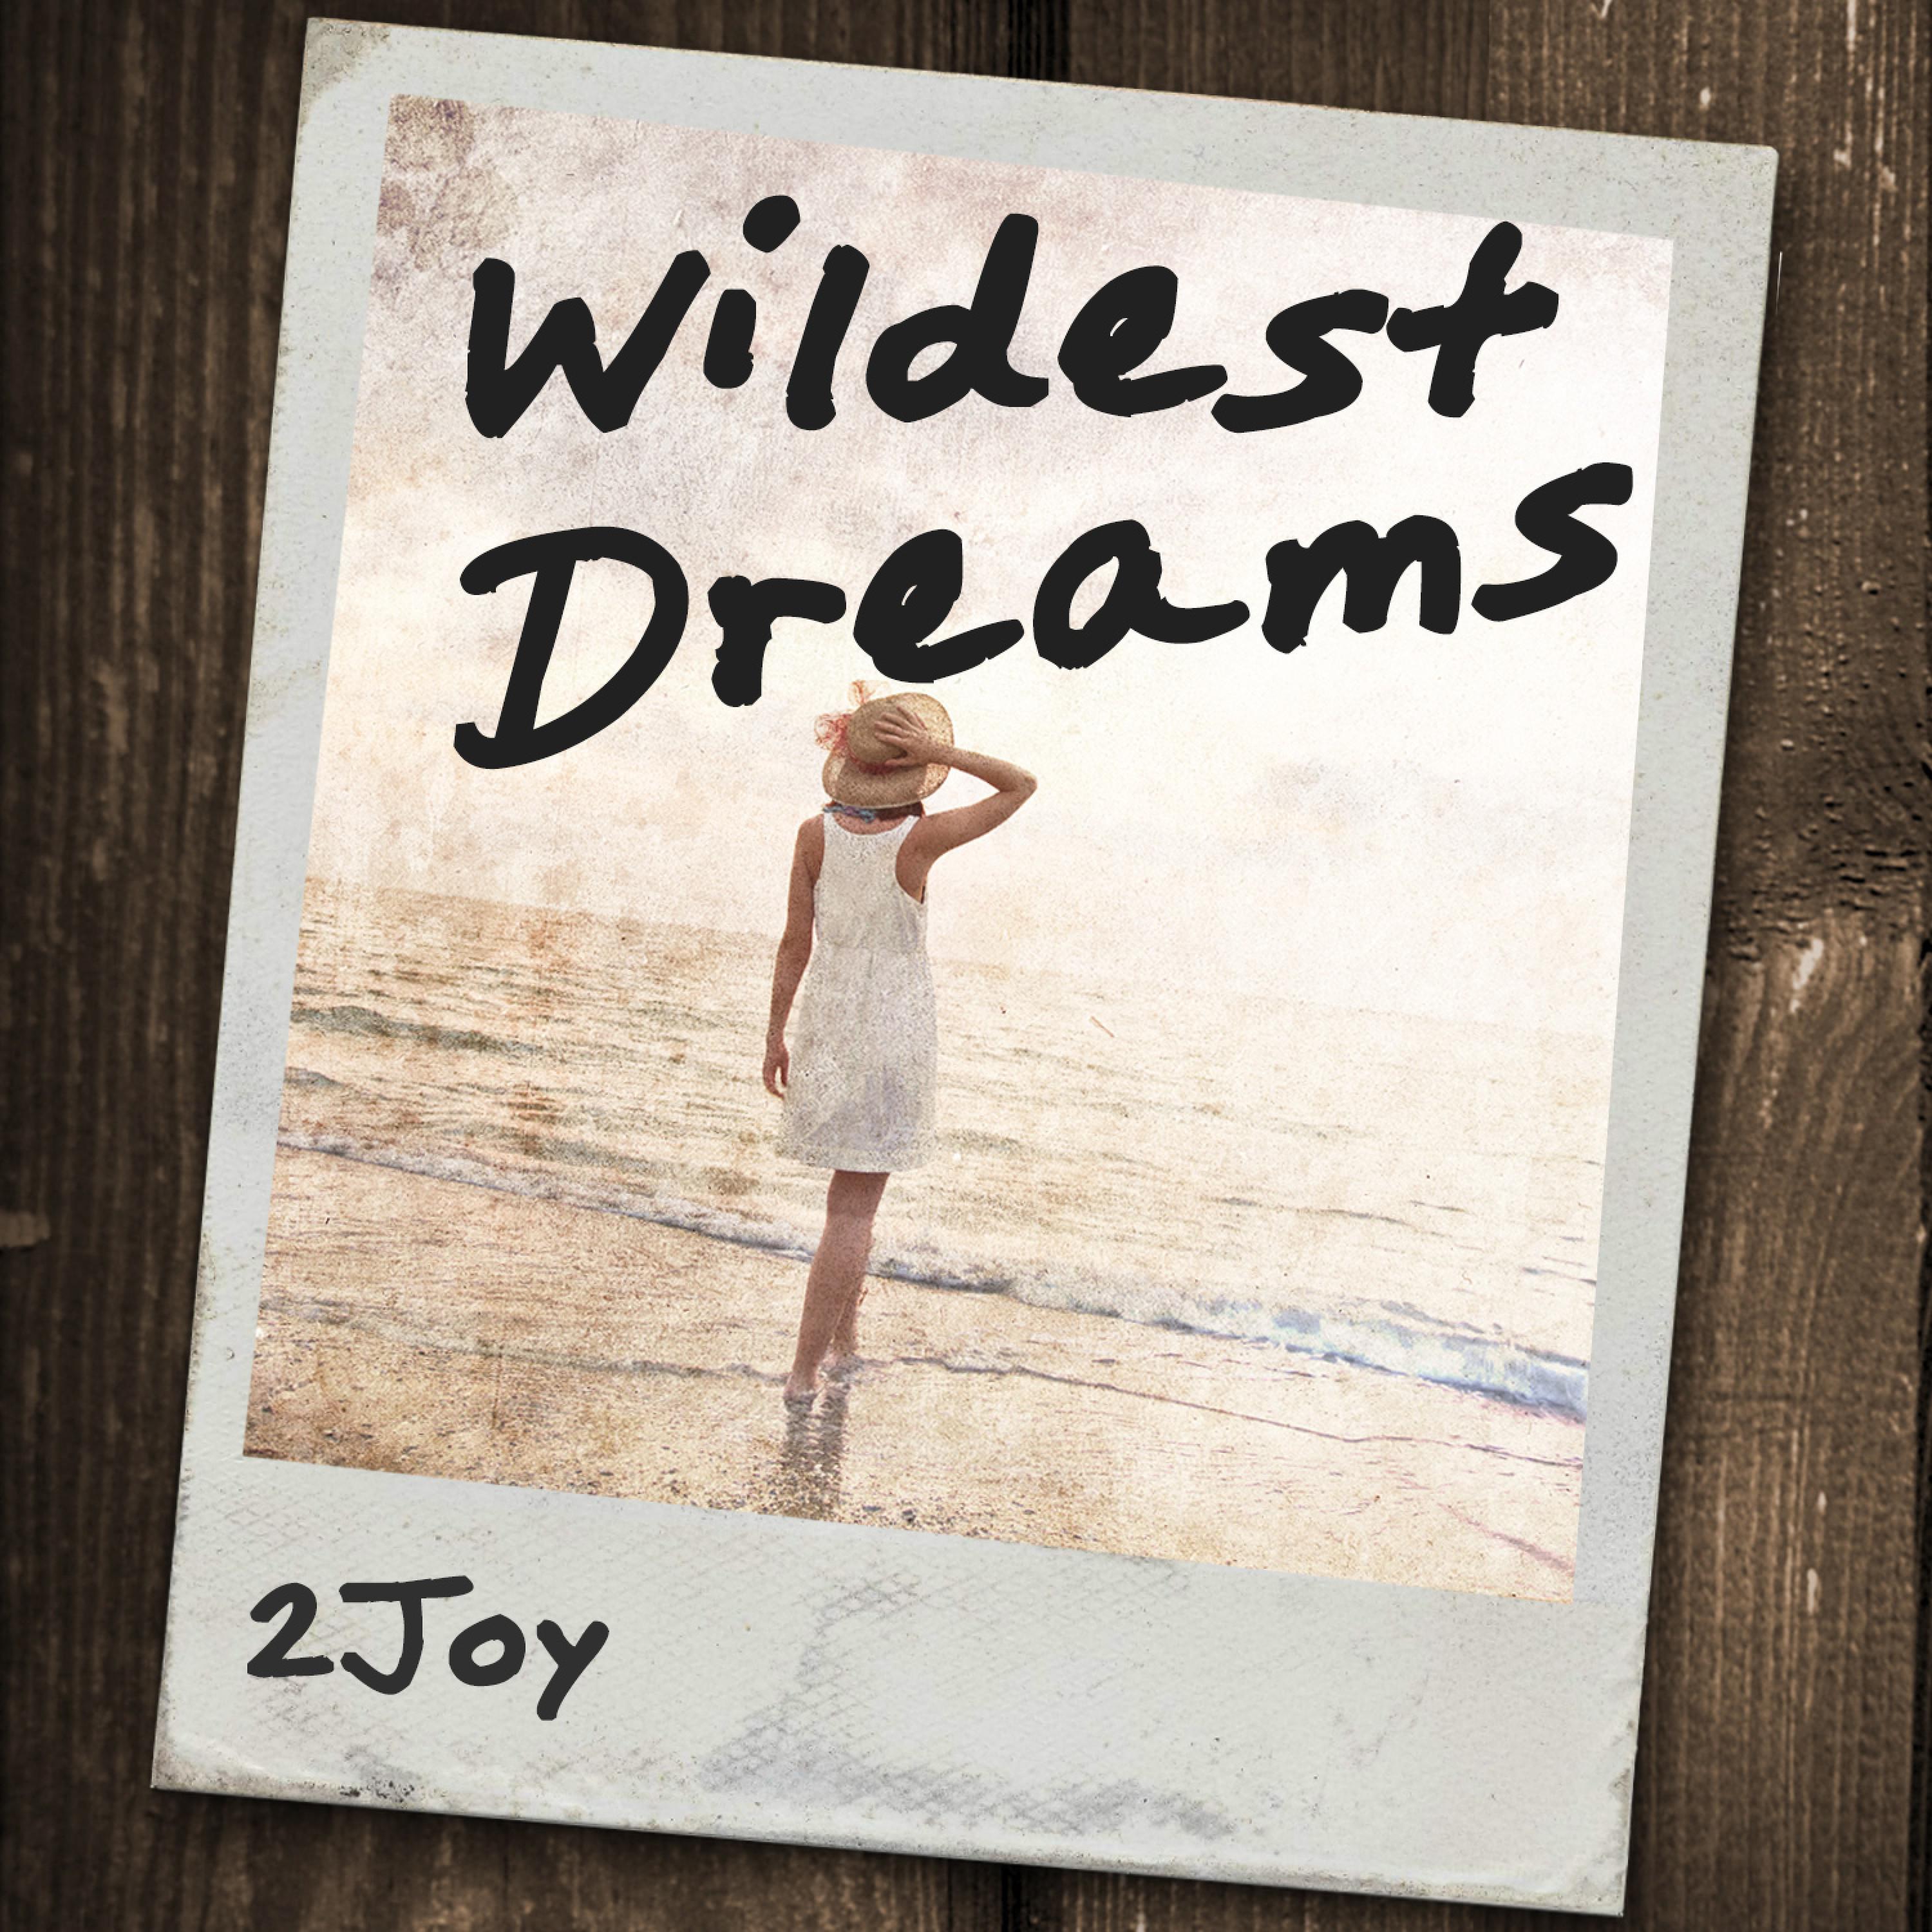 Wildest Dreams.2 Joy.(Wildest Dreams)专 辑.(Wildest Dreams)专 辑 下 载.(Wilde...